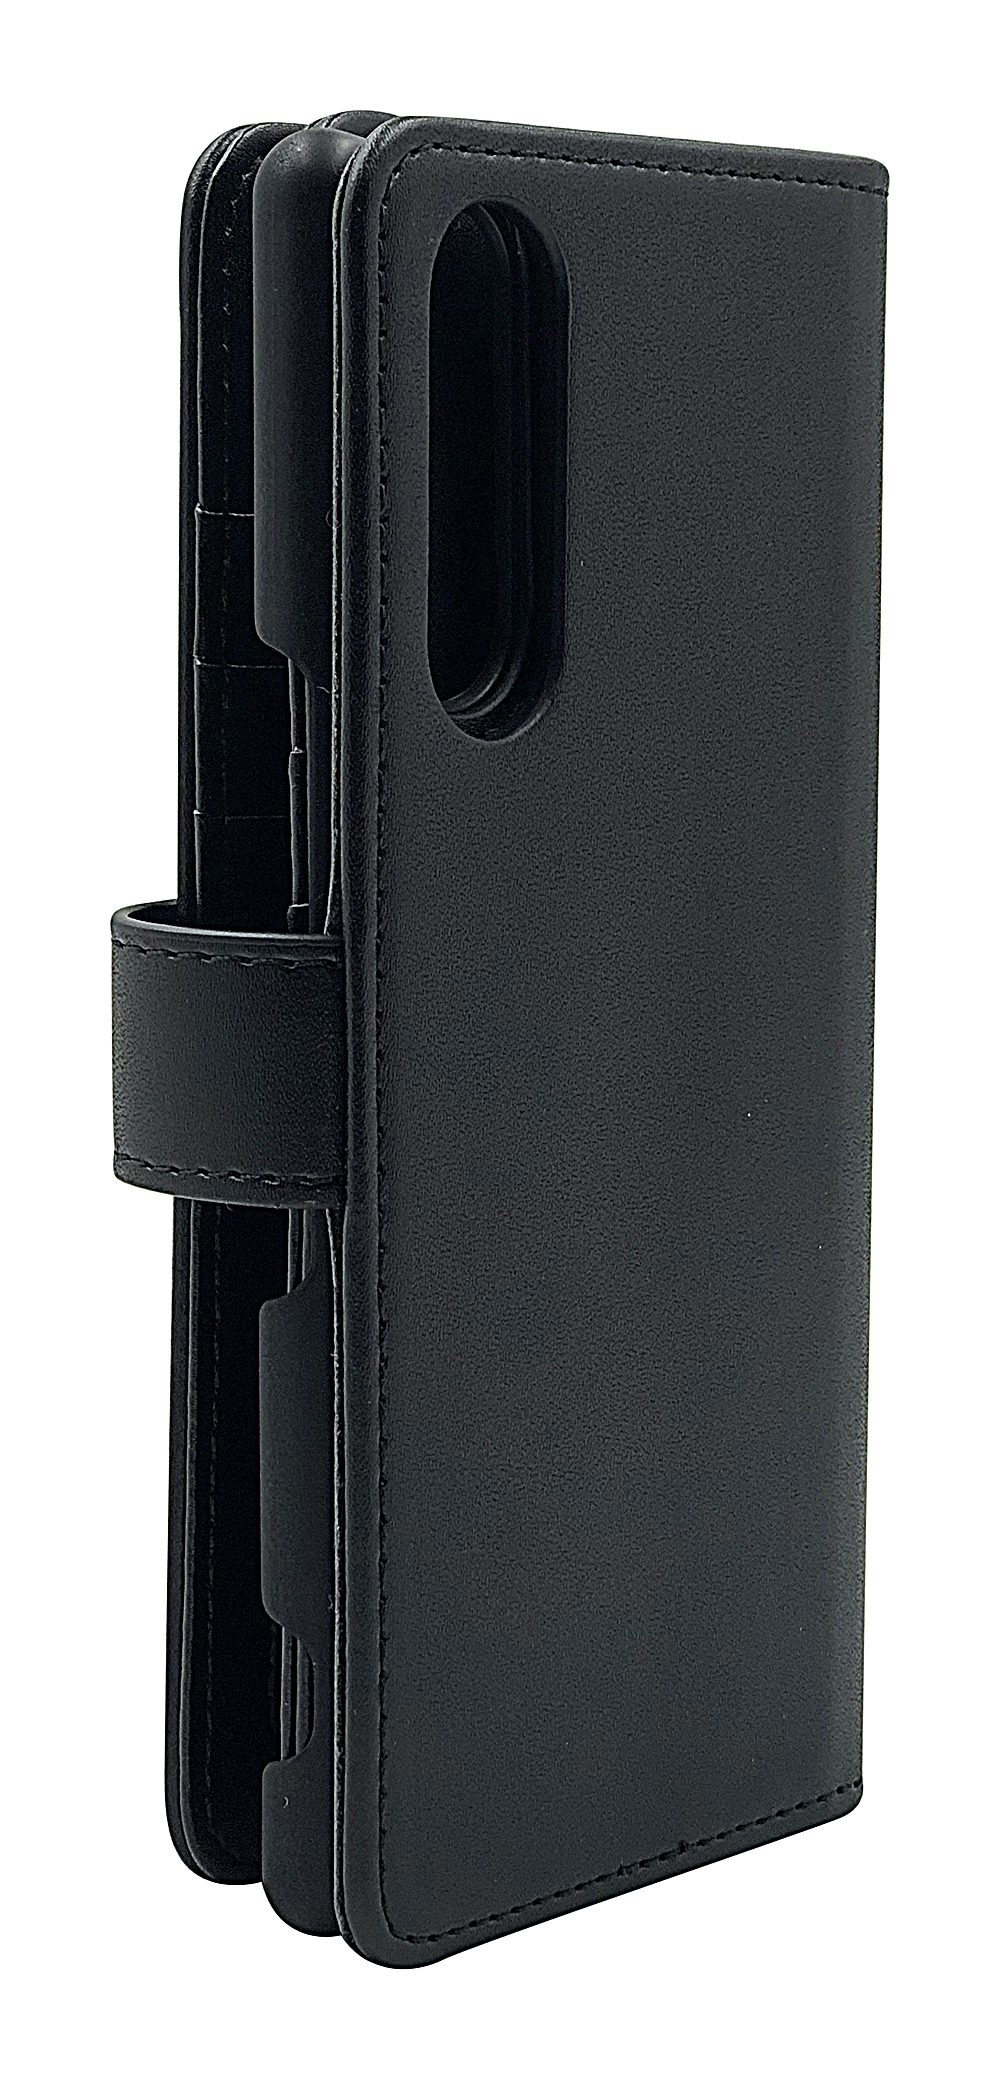 CoverInSkimblocker XL Magnet Fodral Sony Xperia 5